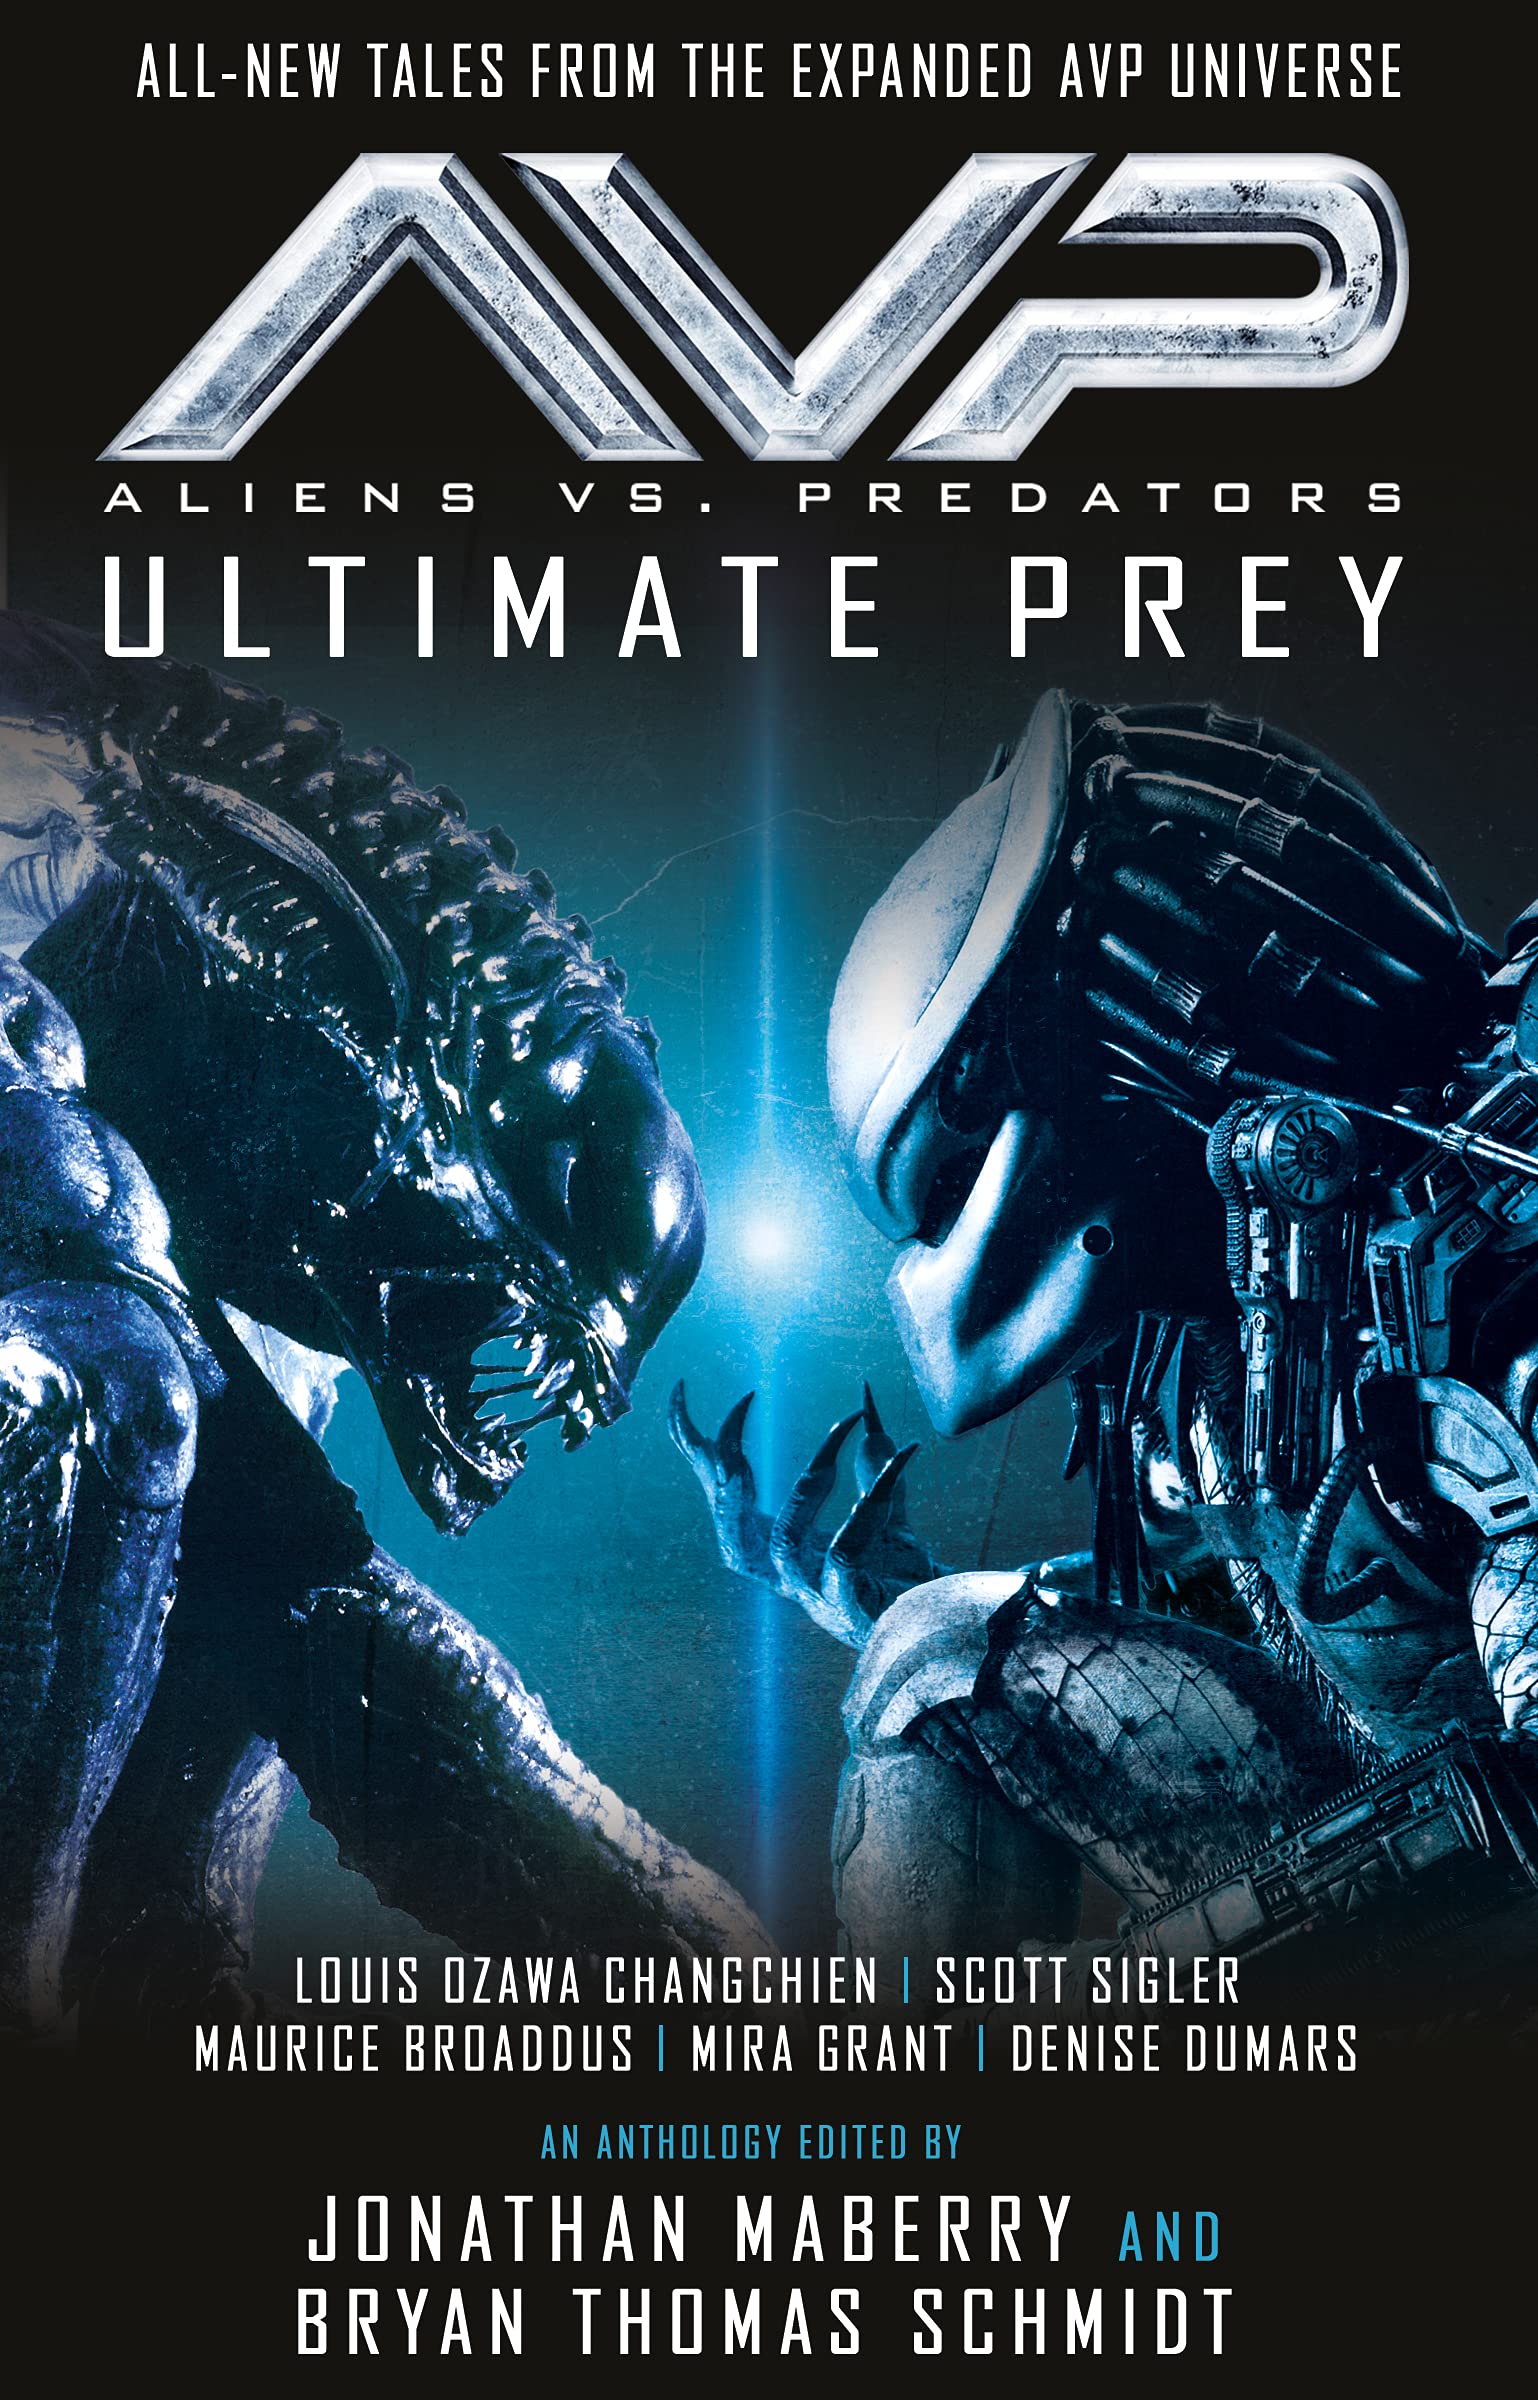 Aliens vs. Predator: Requiem (video game), Xenopedia